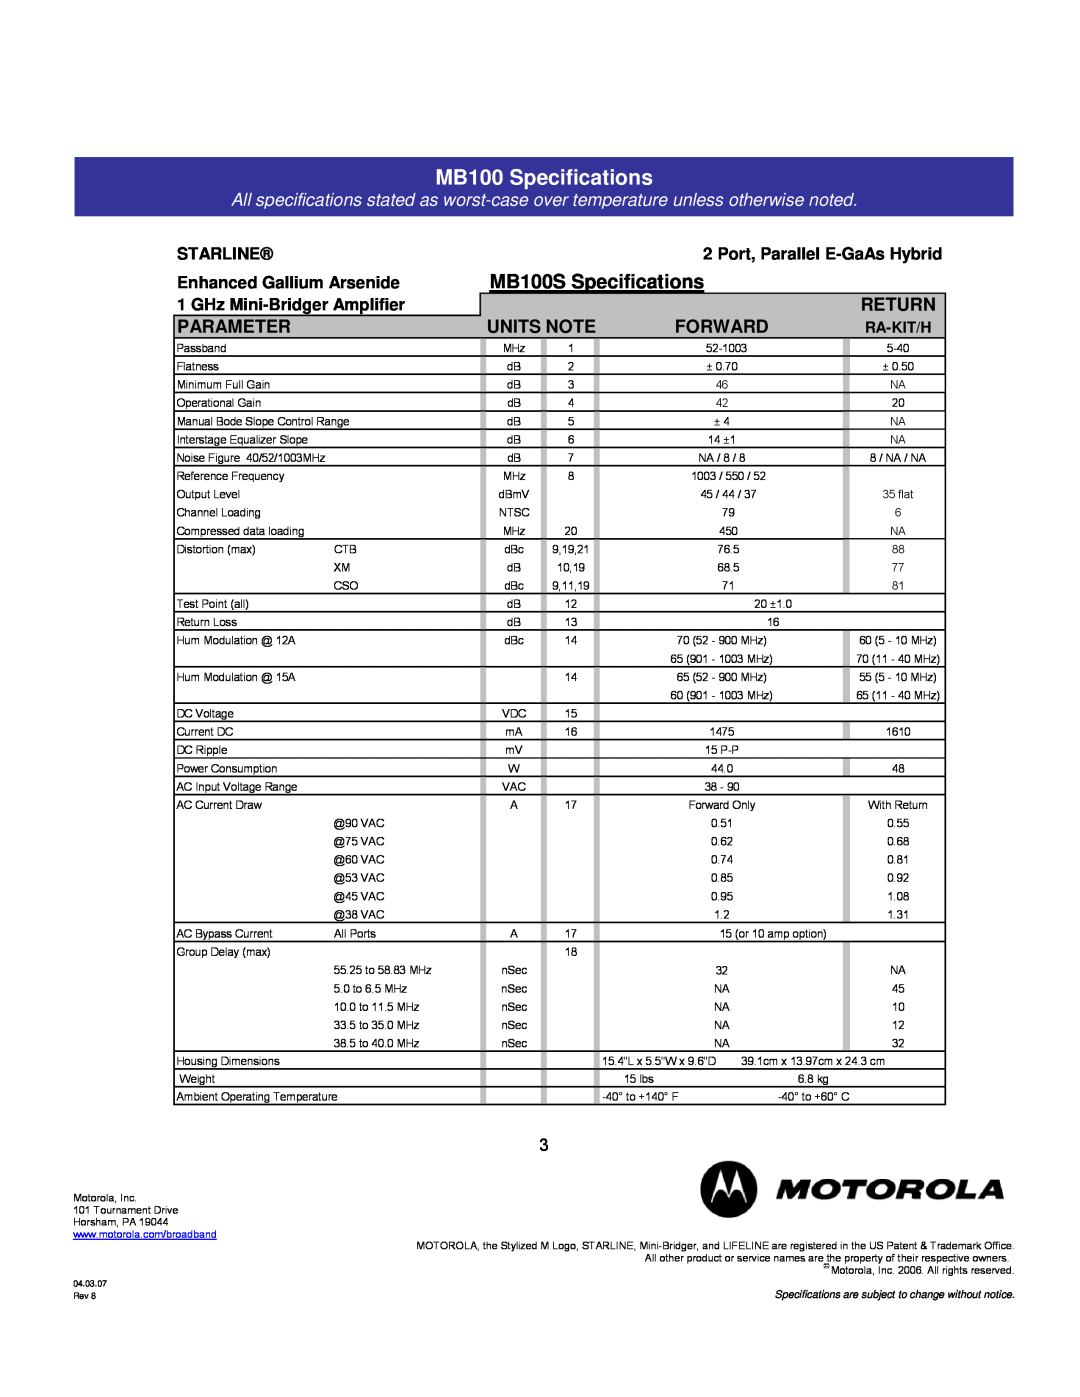 Motorola MB100 Specifications, Starline, Port, Parallel E-GaAsHybrid, Enhanced Gallium Arsenide, Forward, Units Note 